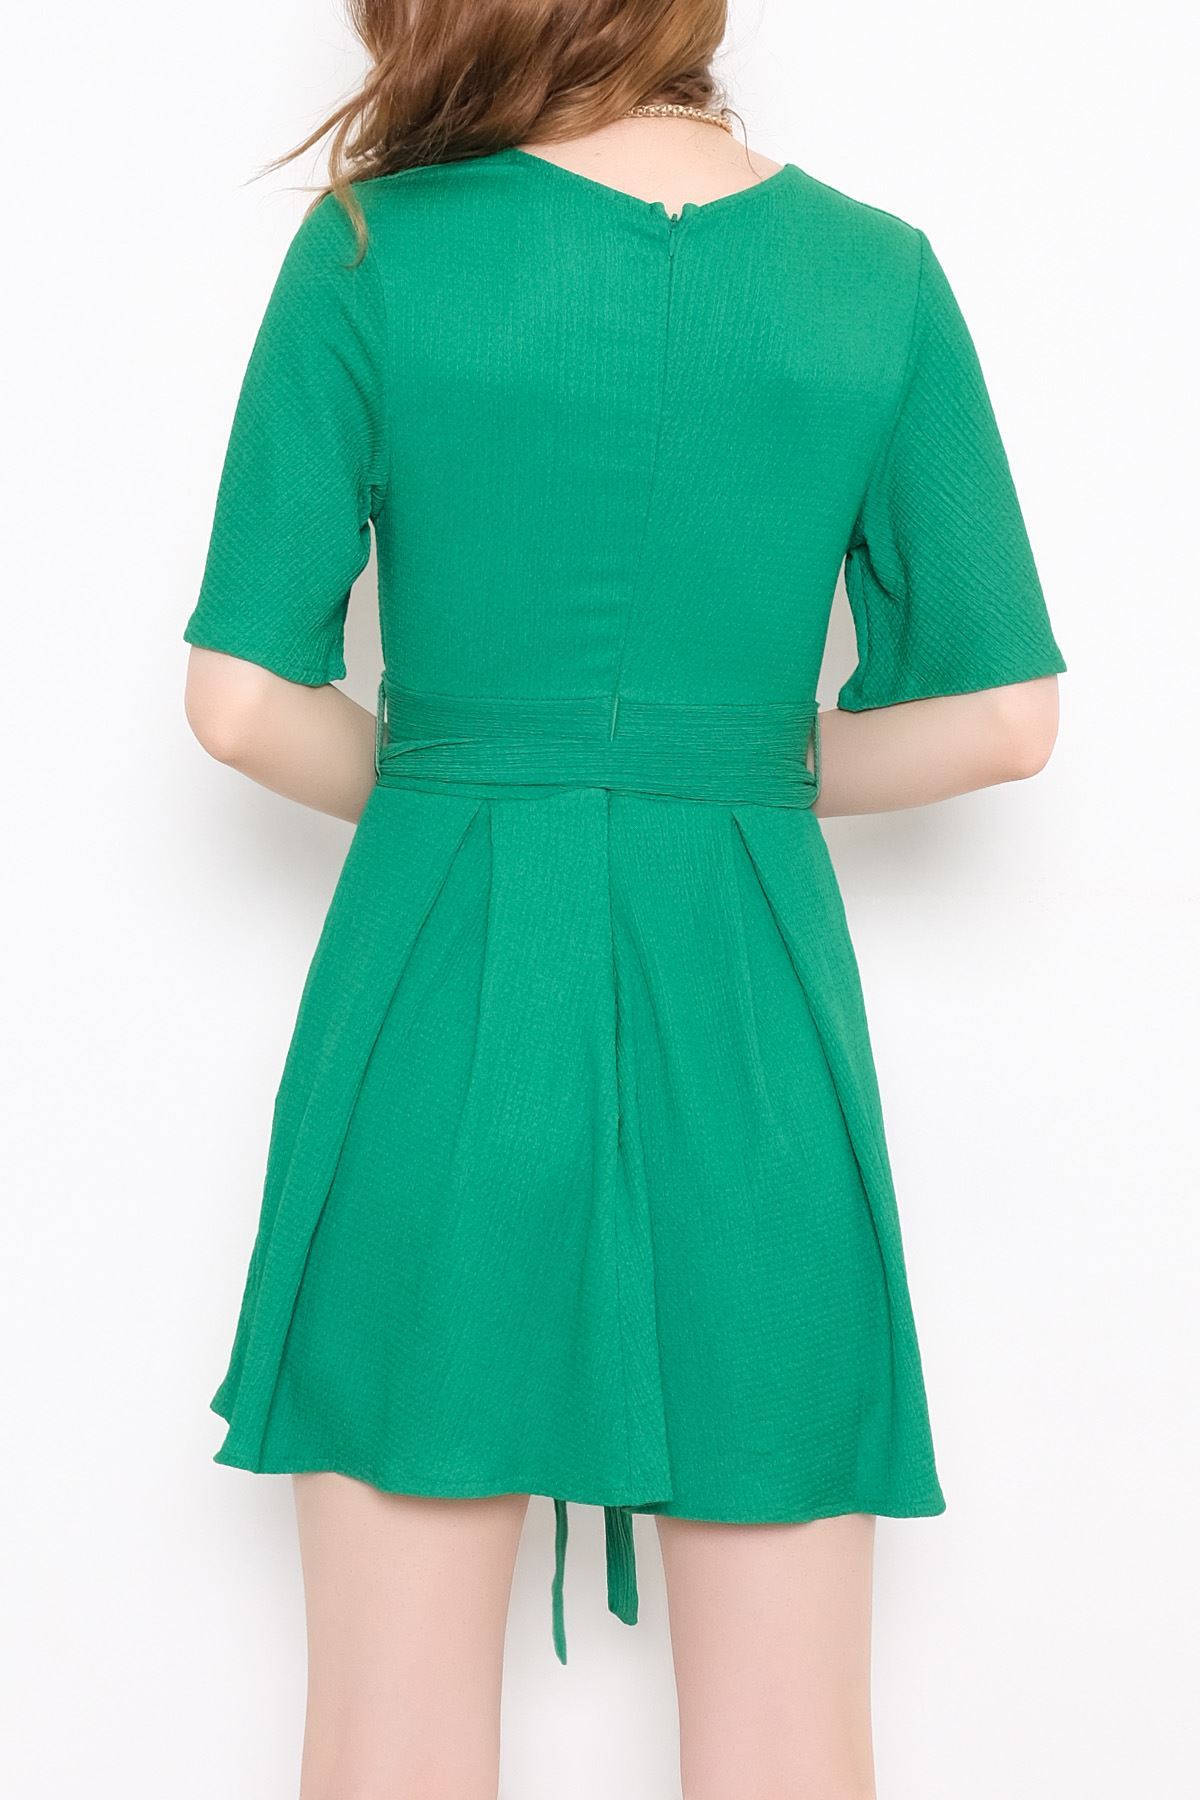 Şortlu Kruvaze Yaka Elbise Yeşil - 10535.1059.